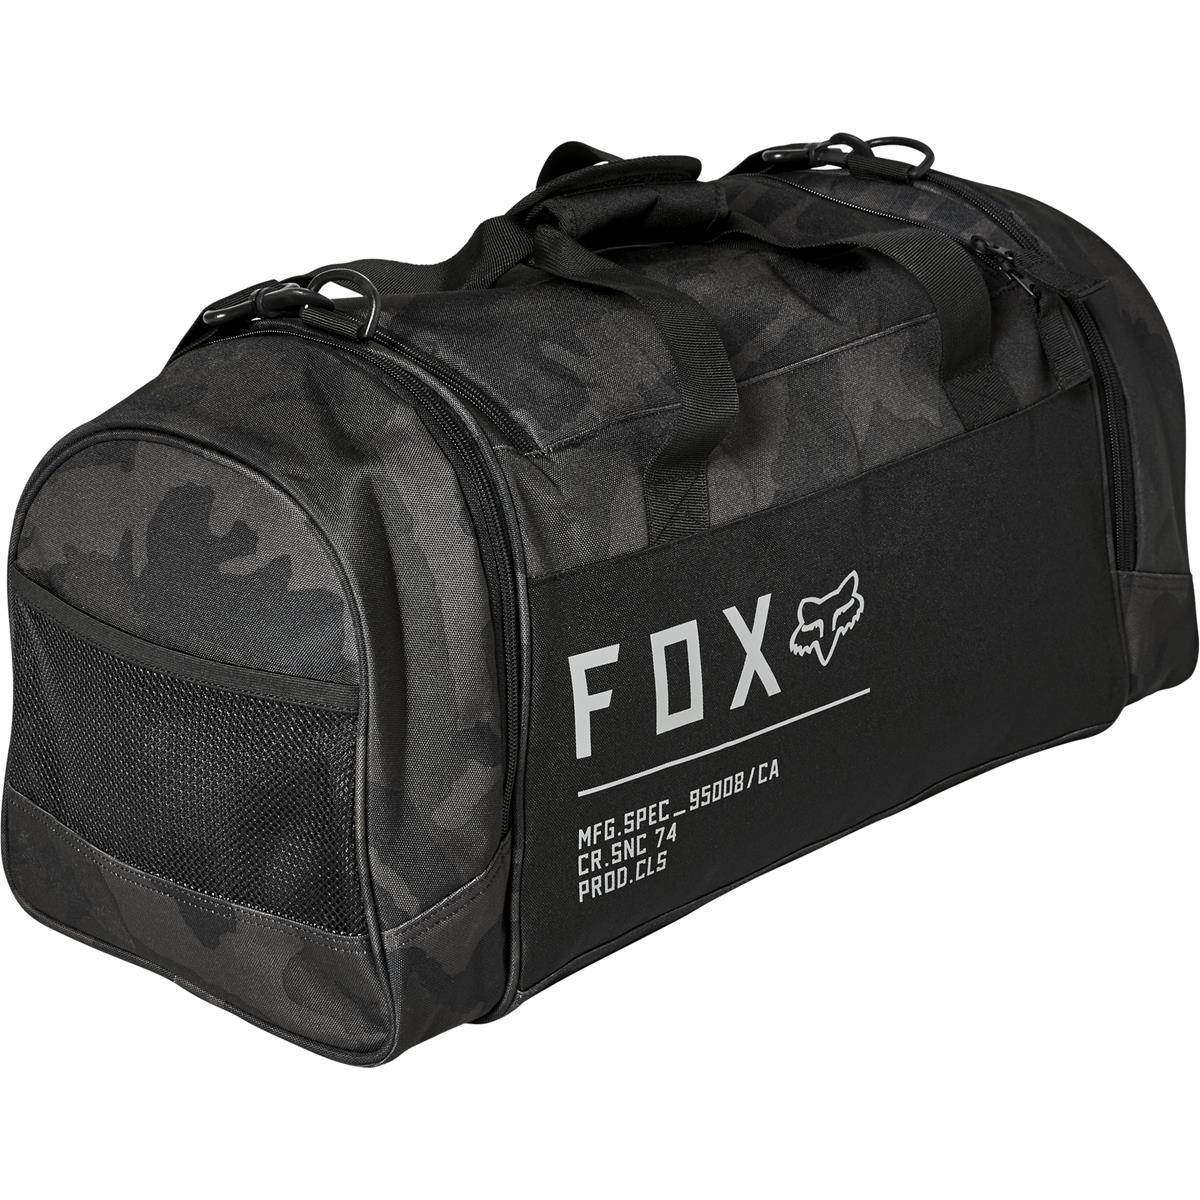 Fox MX Bag 180 Black Camo